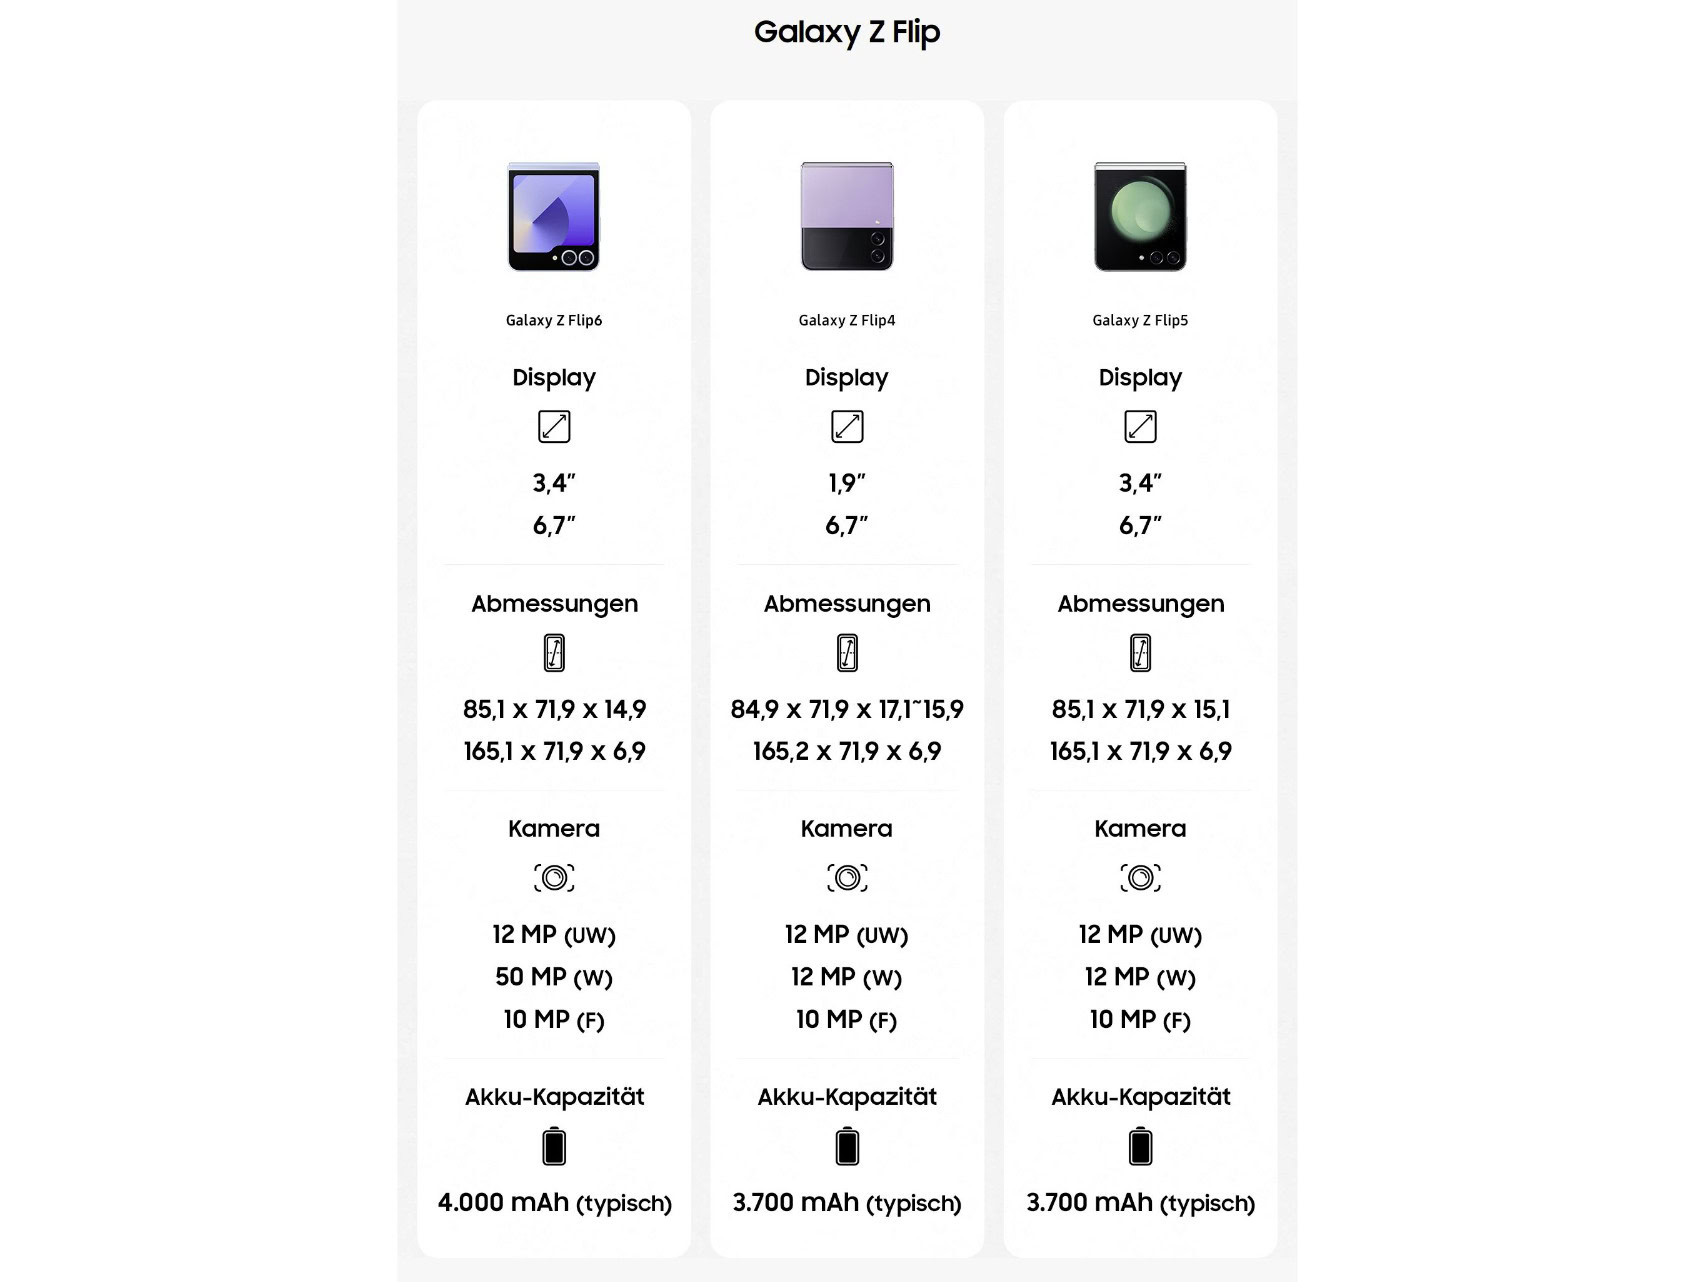 Galaxy Z Flip 6 leaked official product info Evan Blass